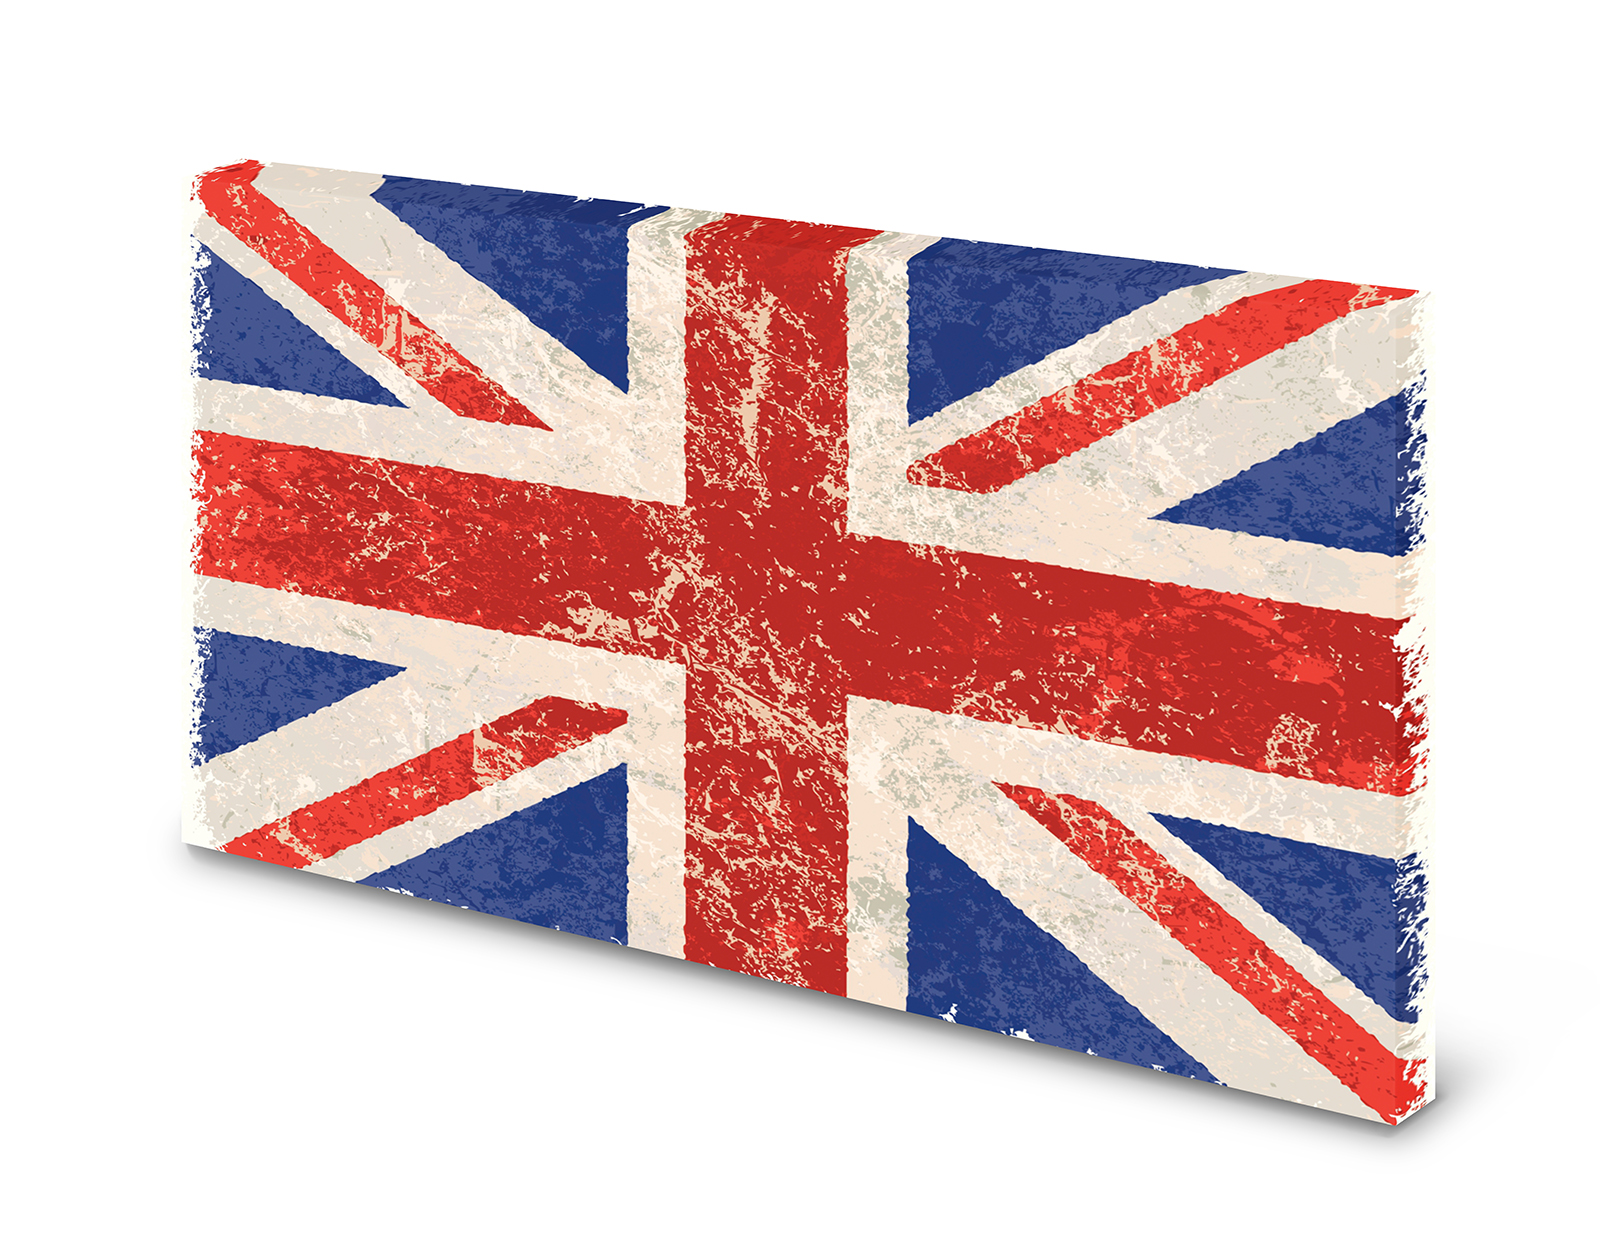 Magnettafel Pinnwand Bild England Fahne Flagge Union Jack